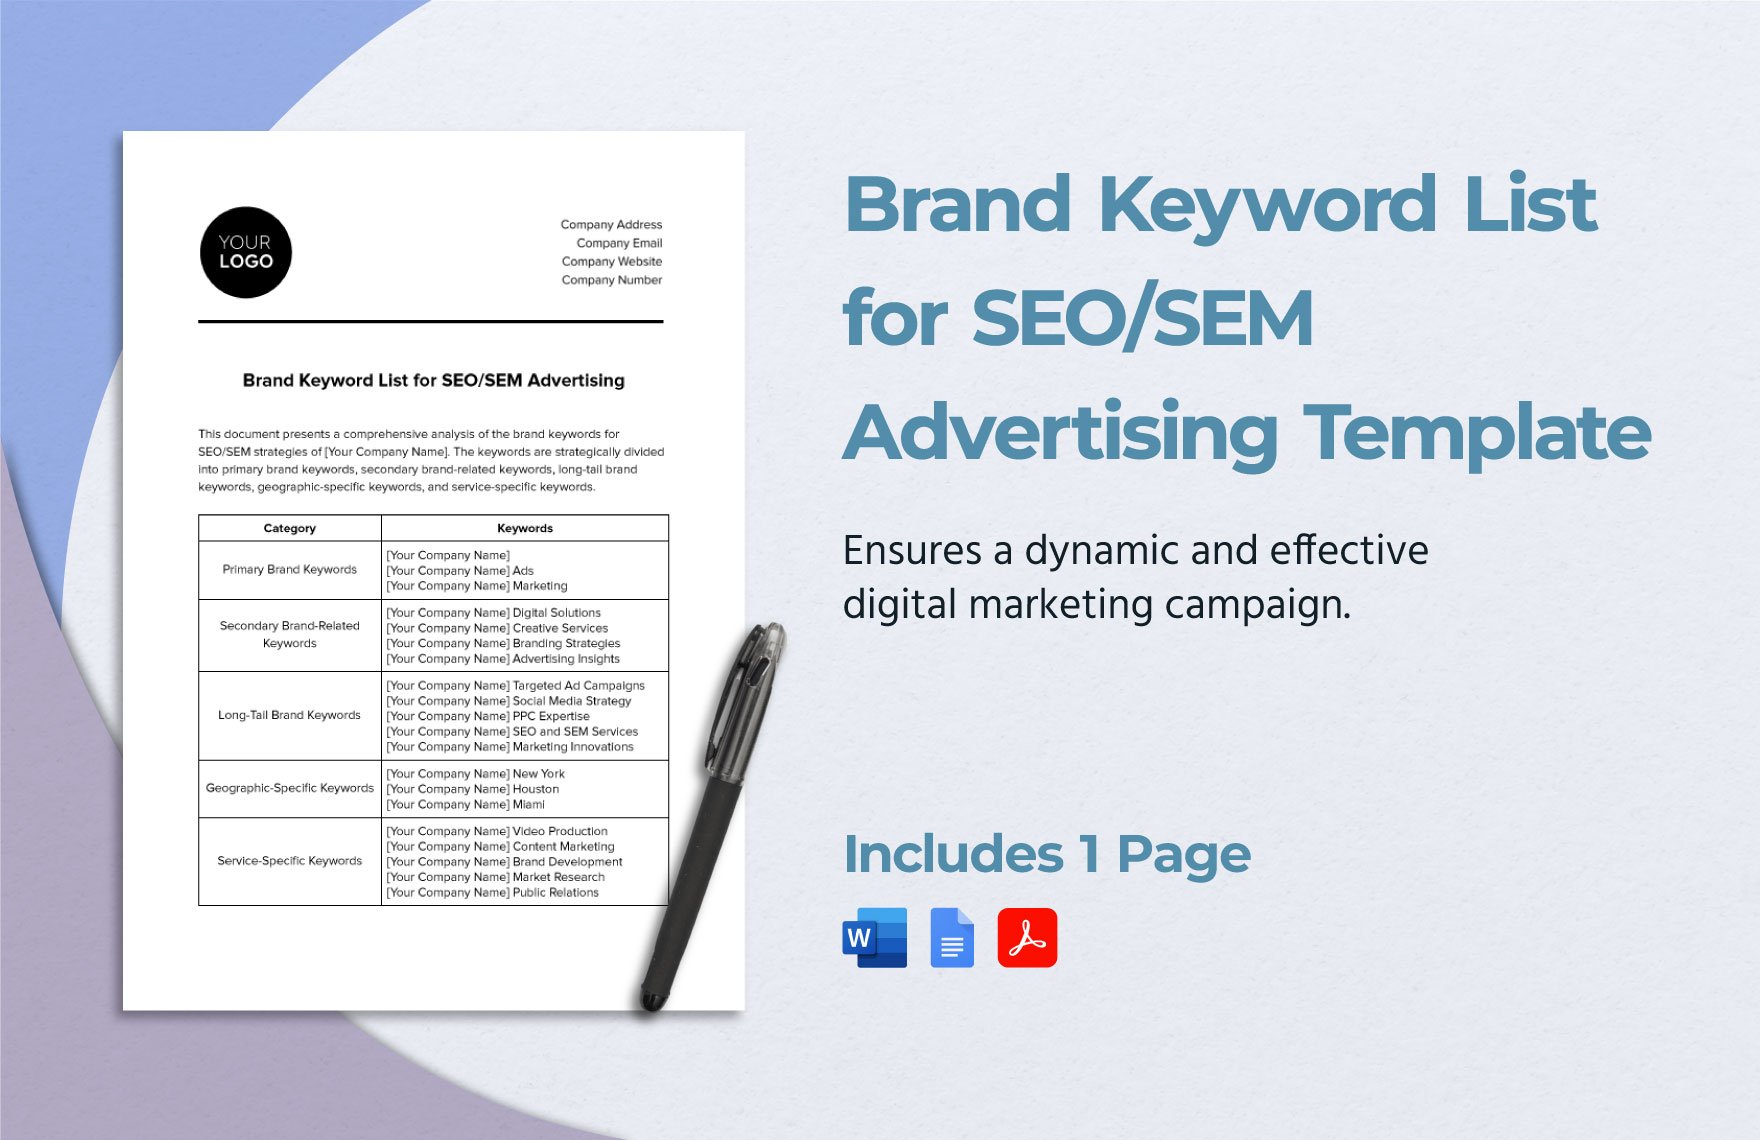 Brand Keyword List for SEO/SEM Advertising Template